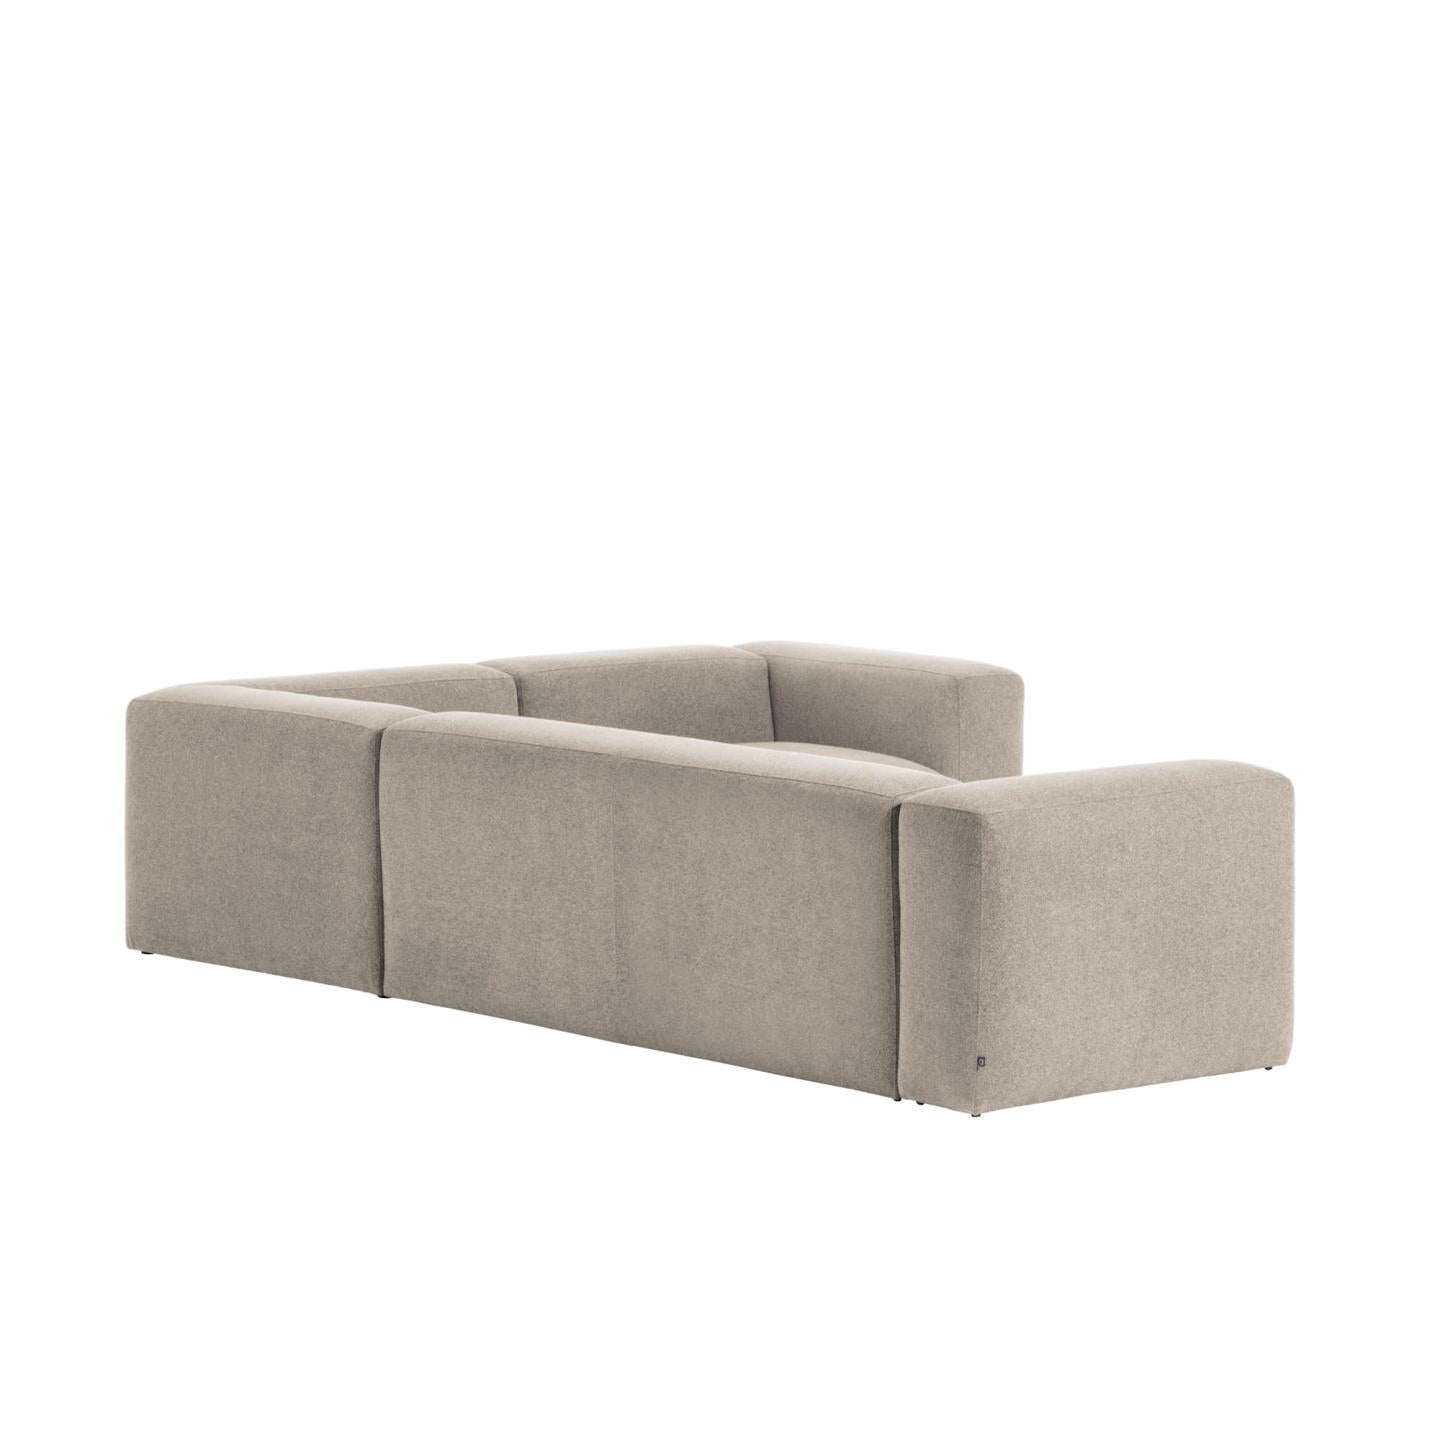 Blok 4 seater corner sofa in beige, 320 x 230 cm / 230 x 320 cm